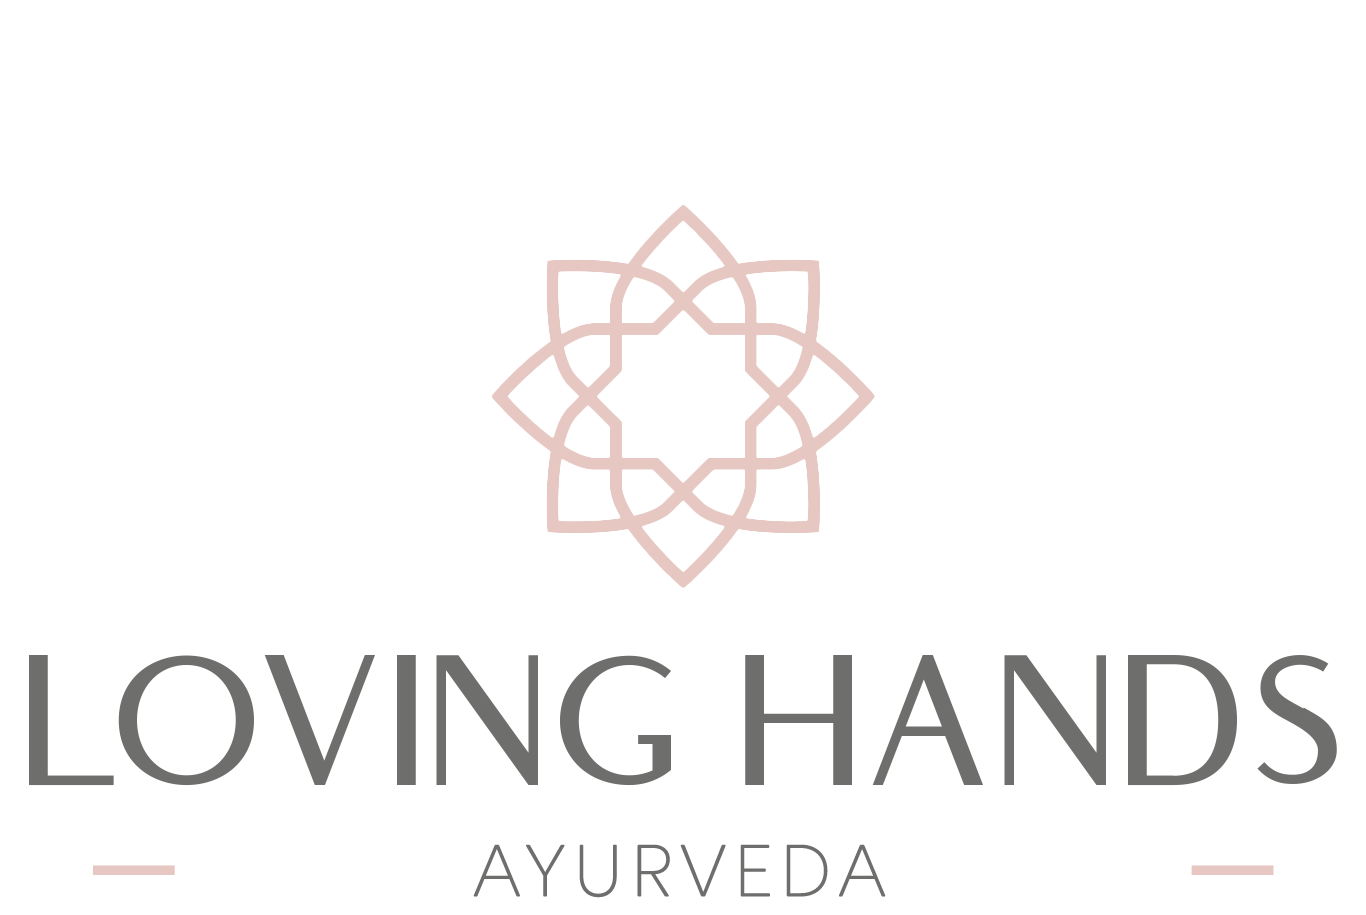 Loving Hands Ayurveda